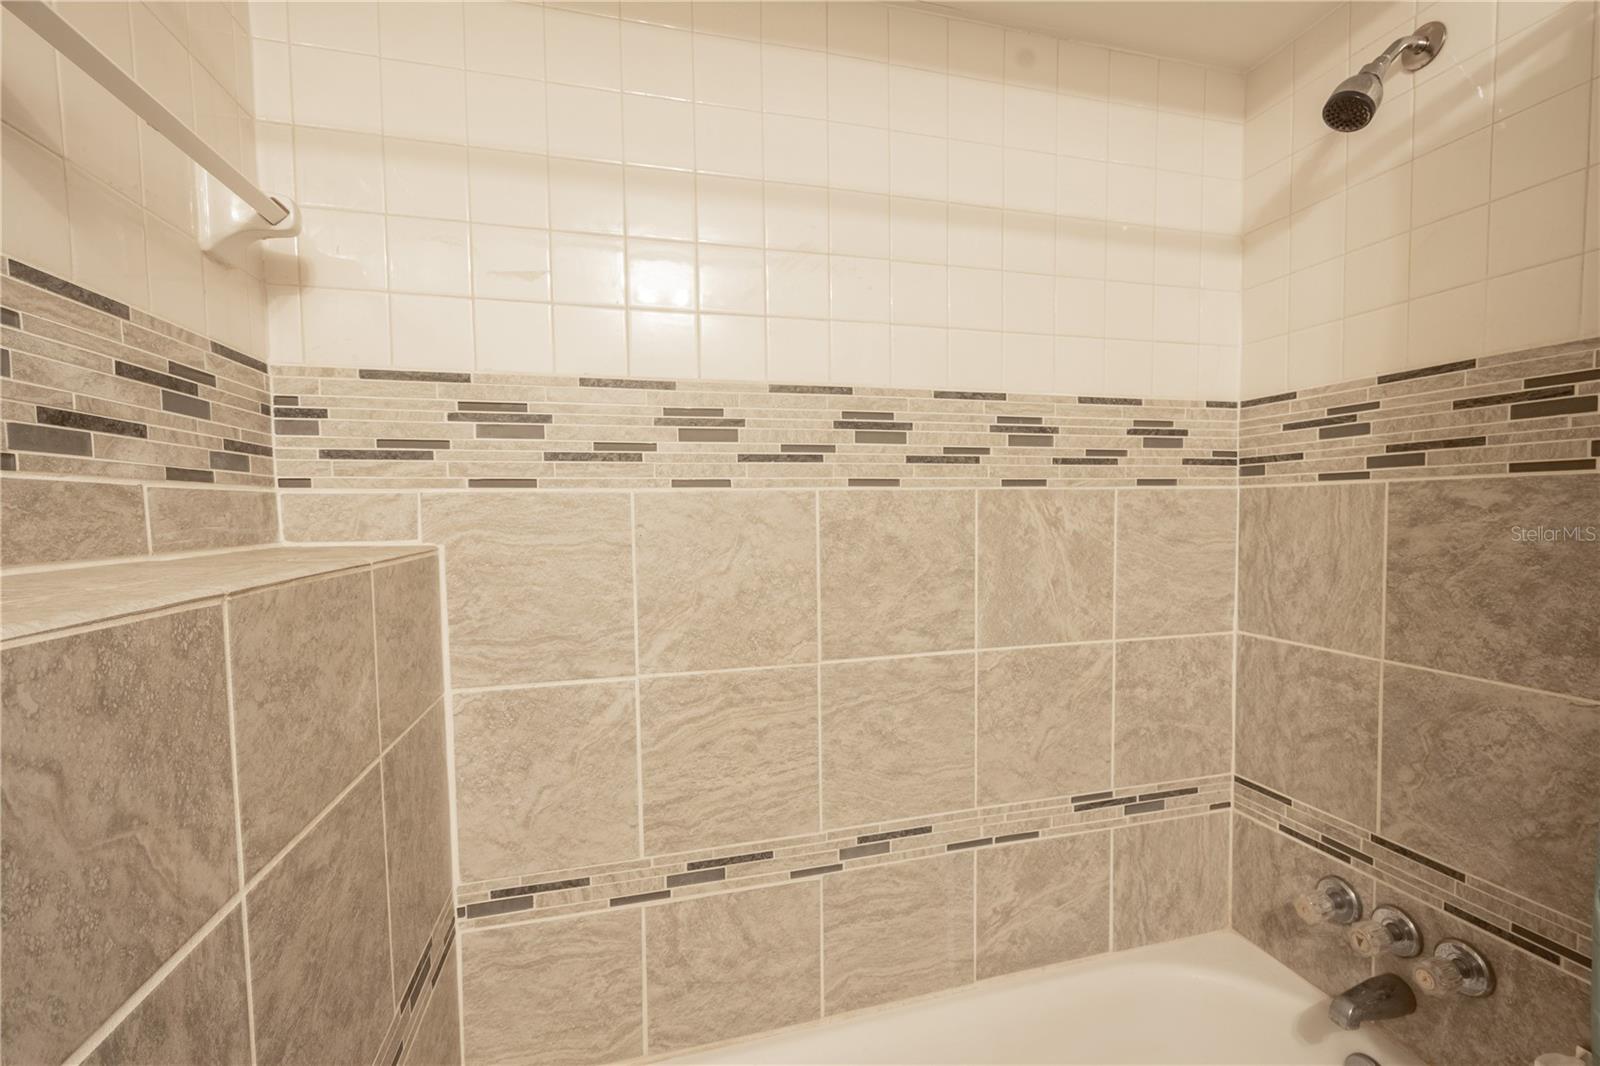 The tub features decorative tile.